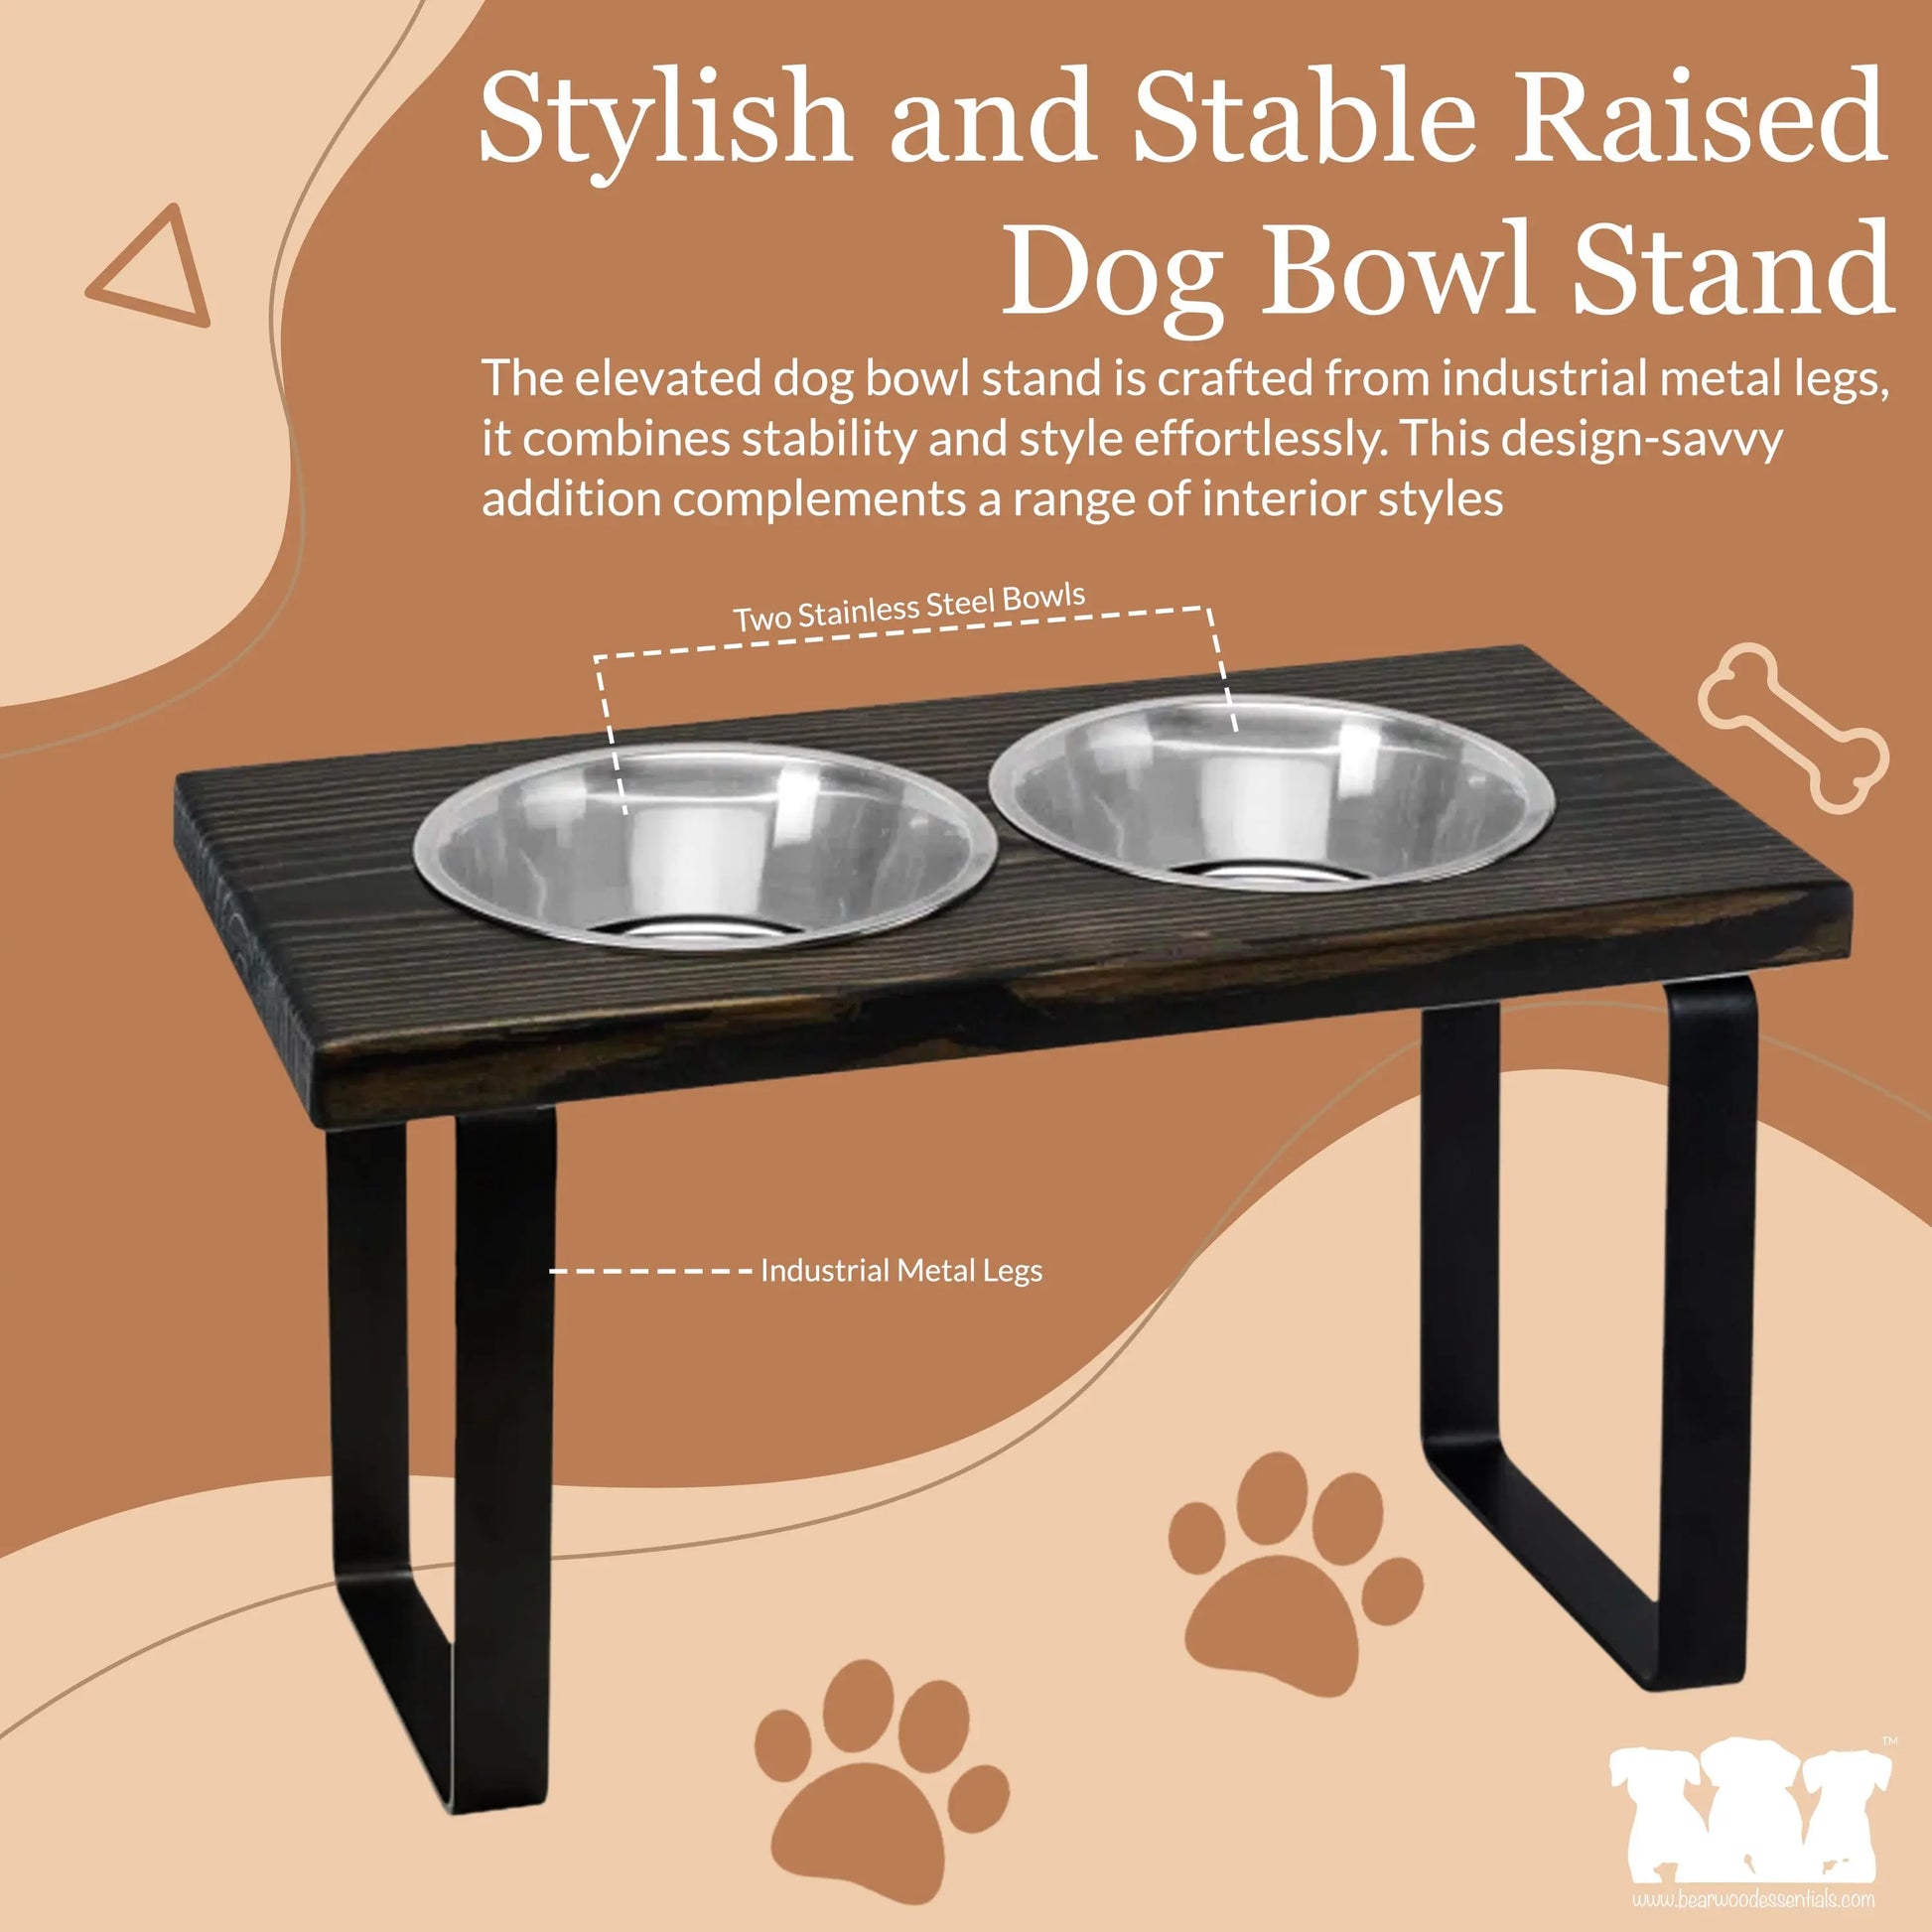 Elevated Dog Bowls Raised Dog Bowl Stand Feeder for Large Medium